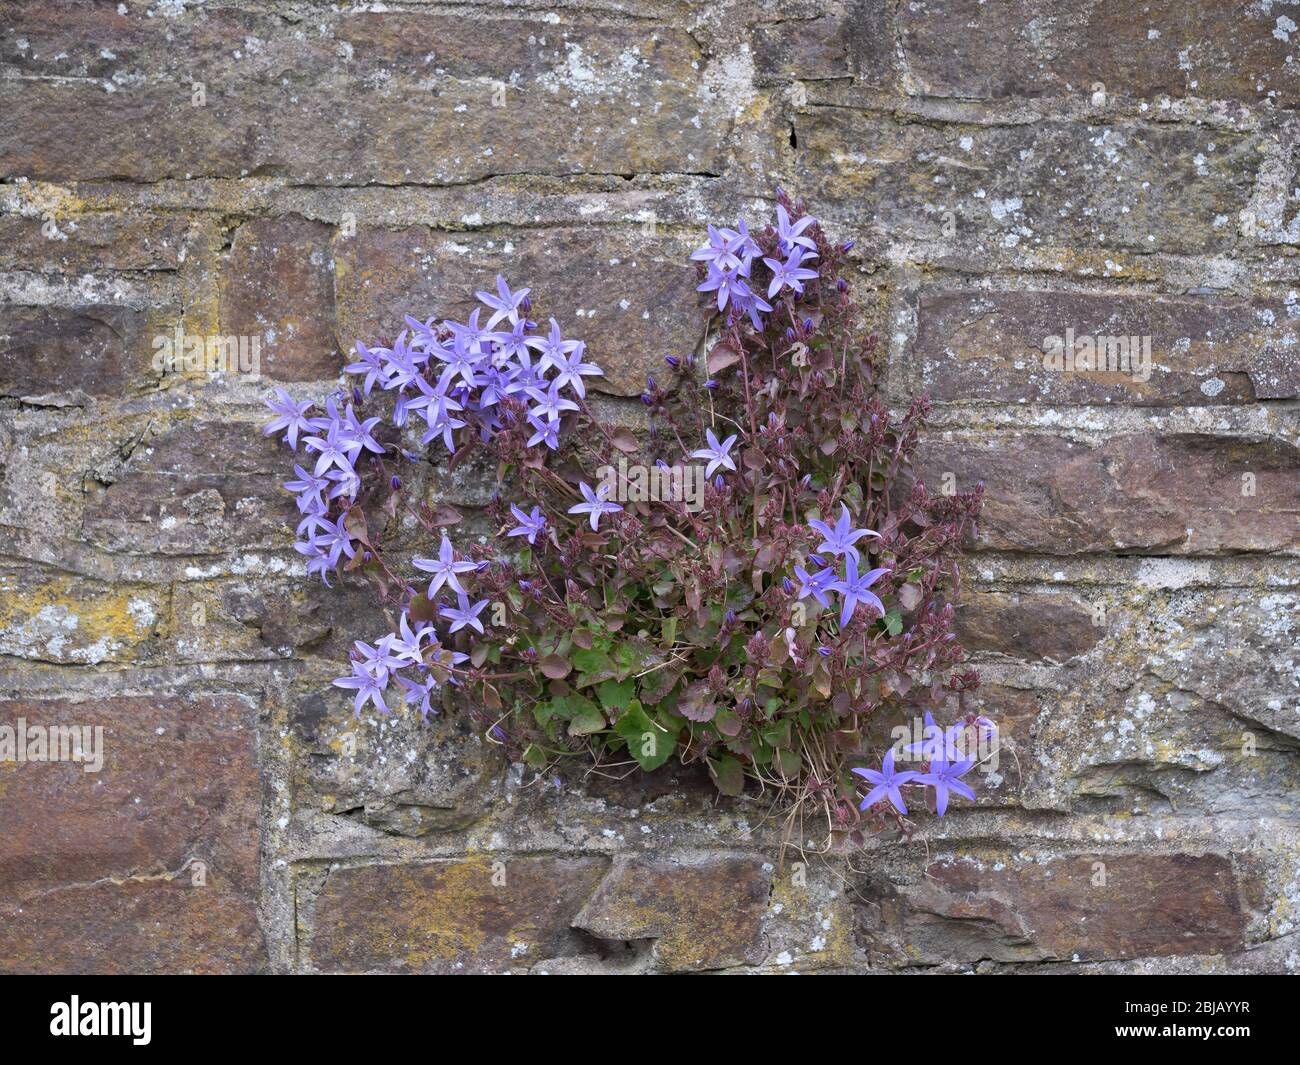 Campanula portenschlagiana aka Dalmatian bellflower, escaped from garden, growing wild in stone wall. Stock Photo